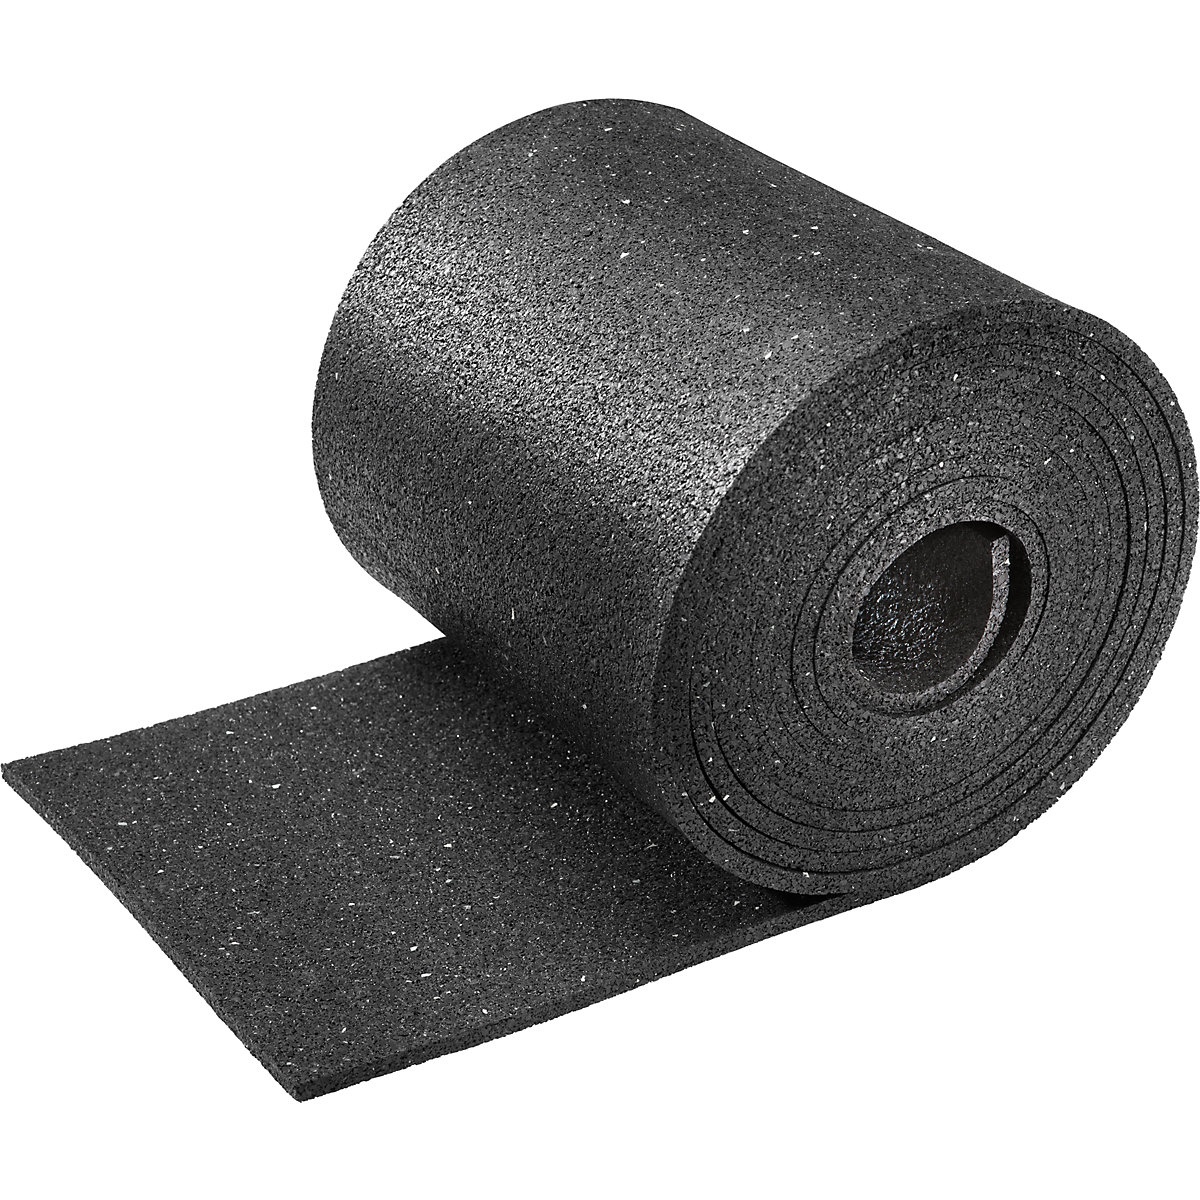 Anti-slip matting for load protection